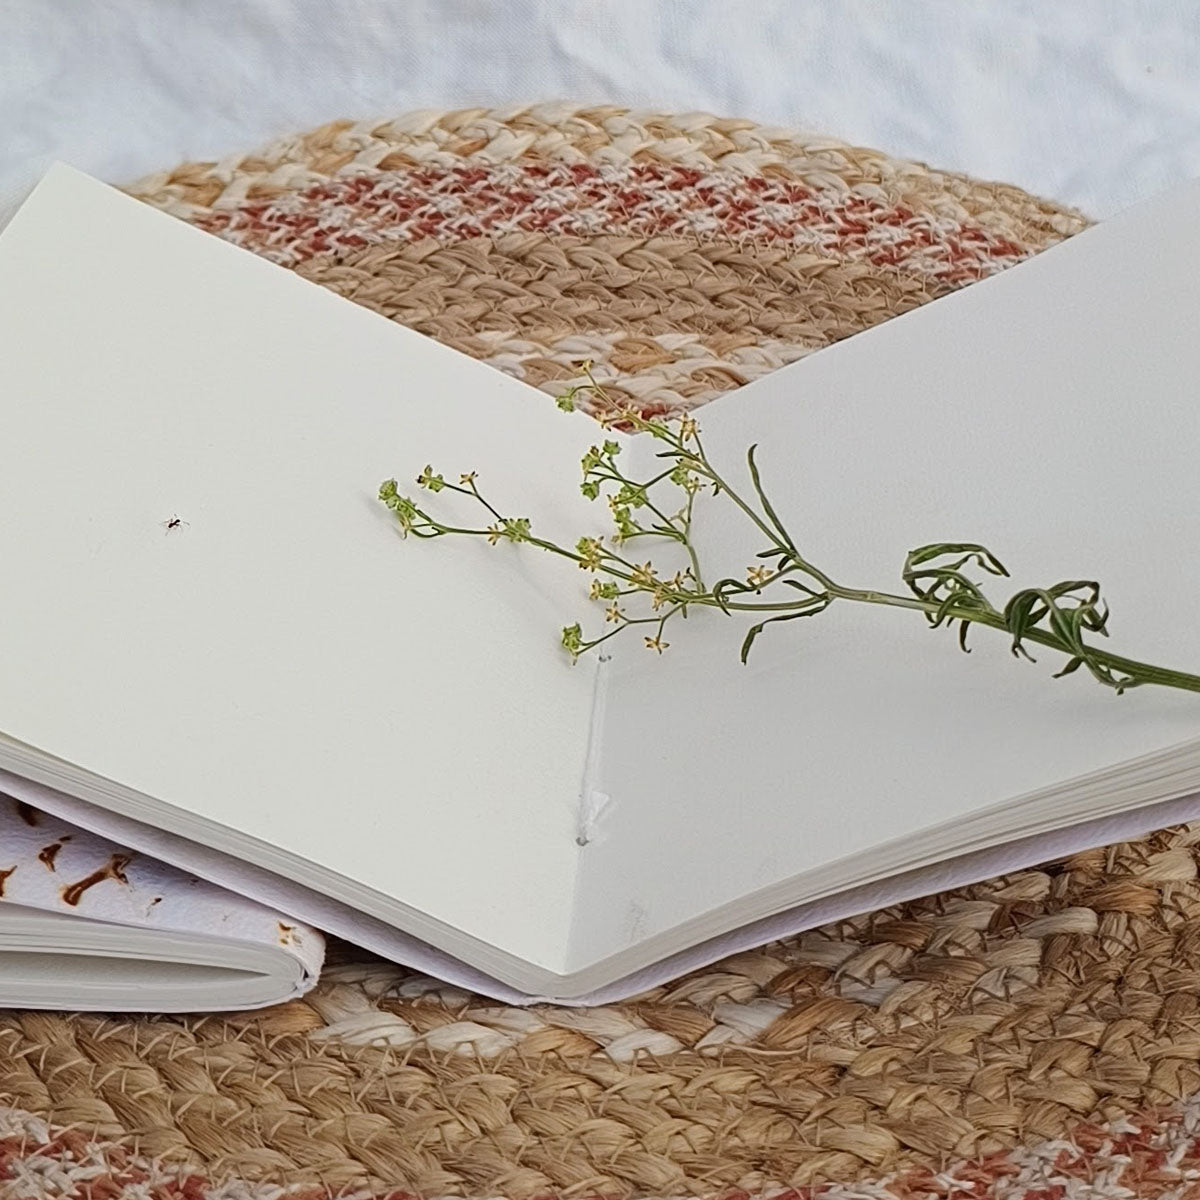 Eco-printed handmade journal - blooming green